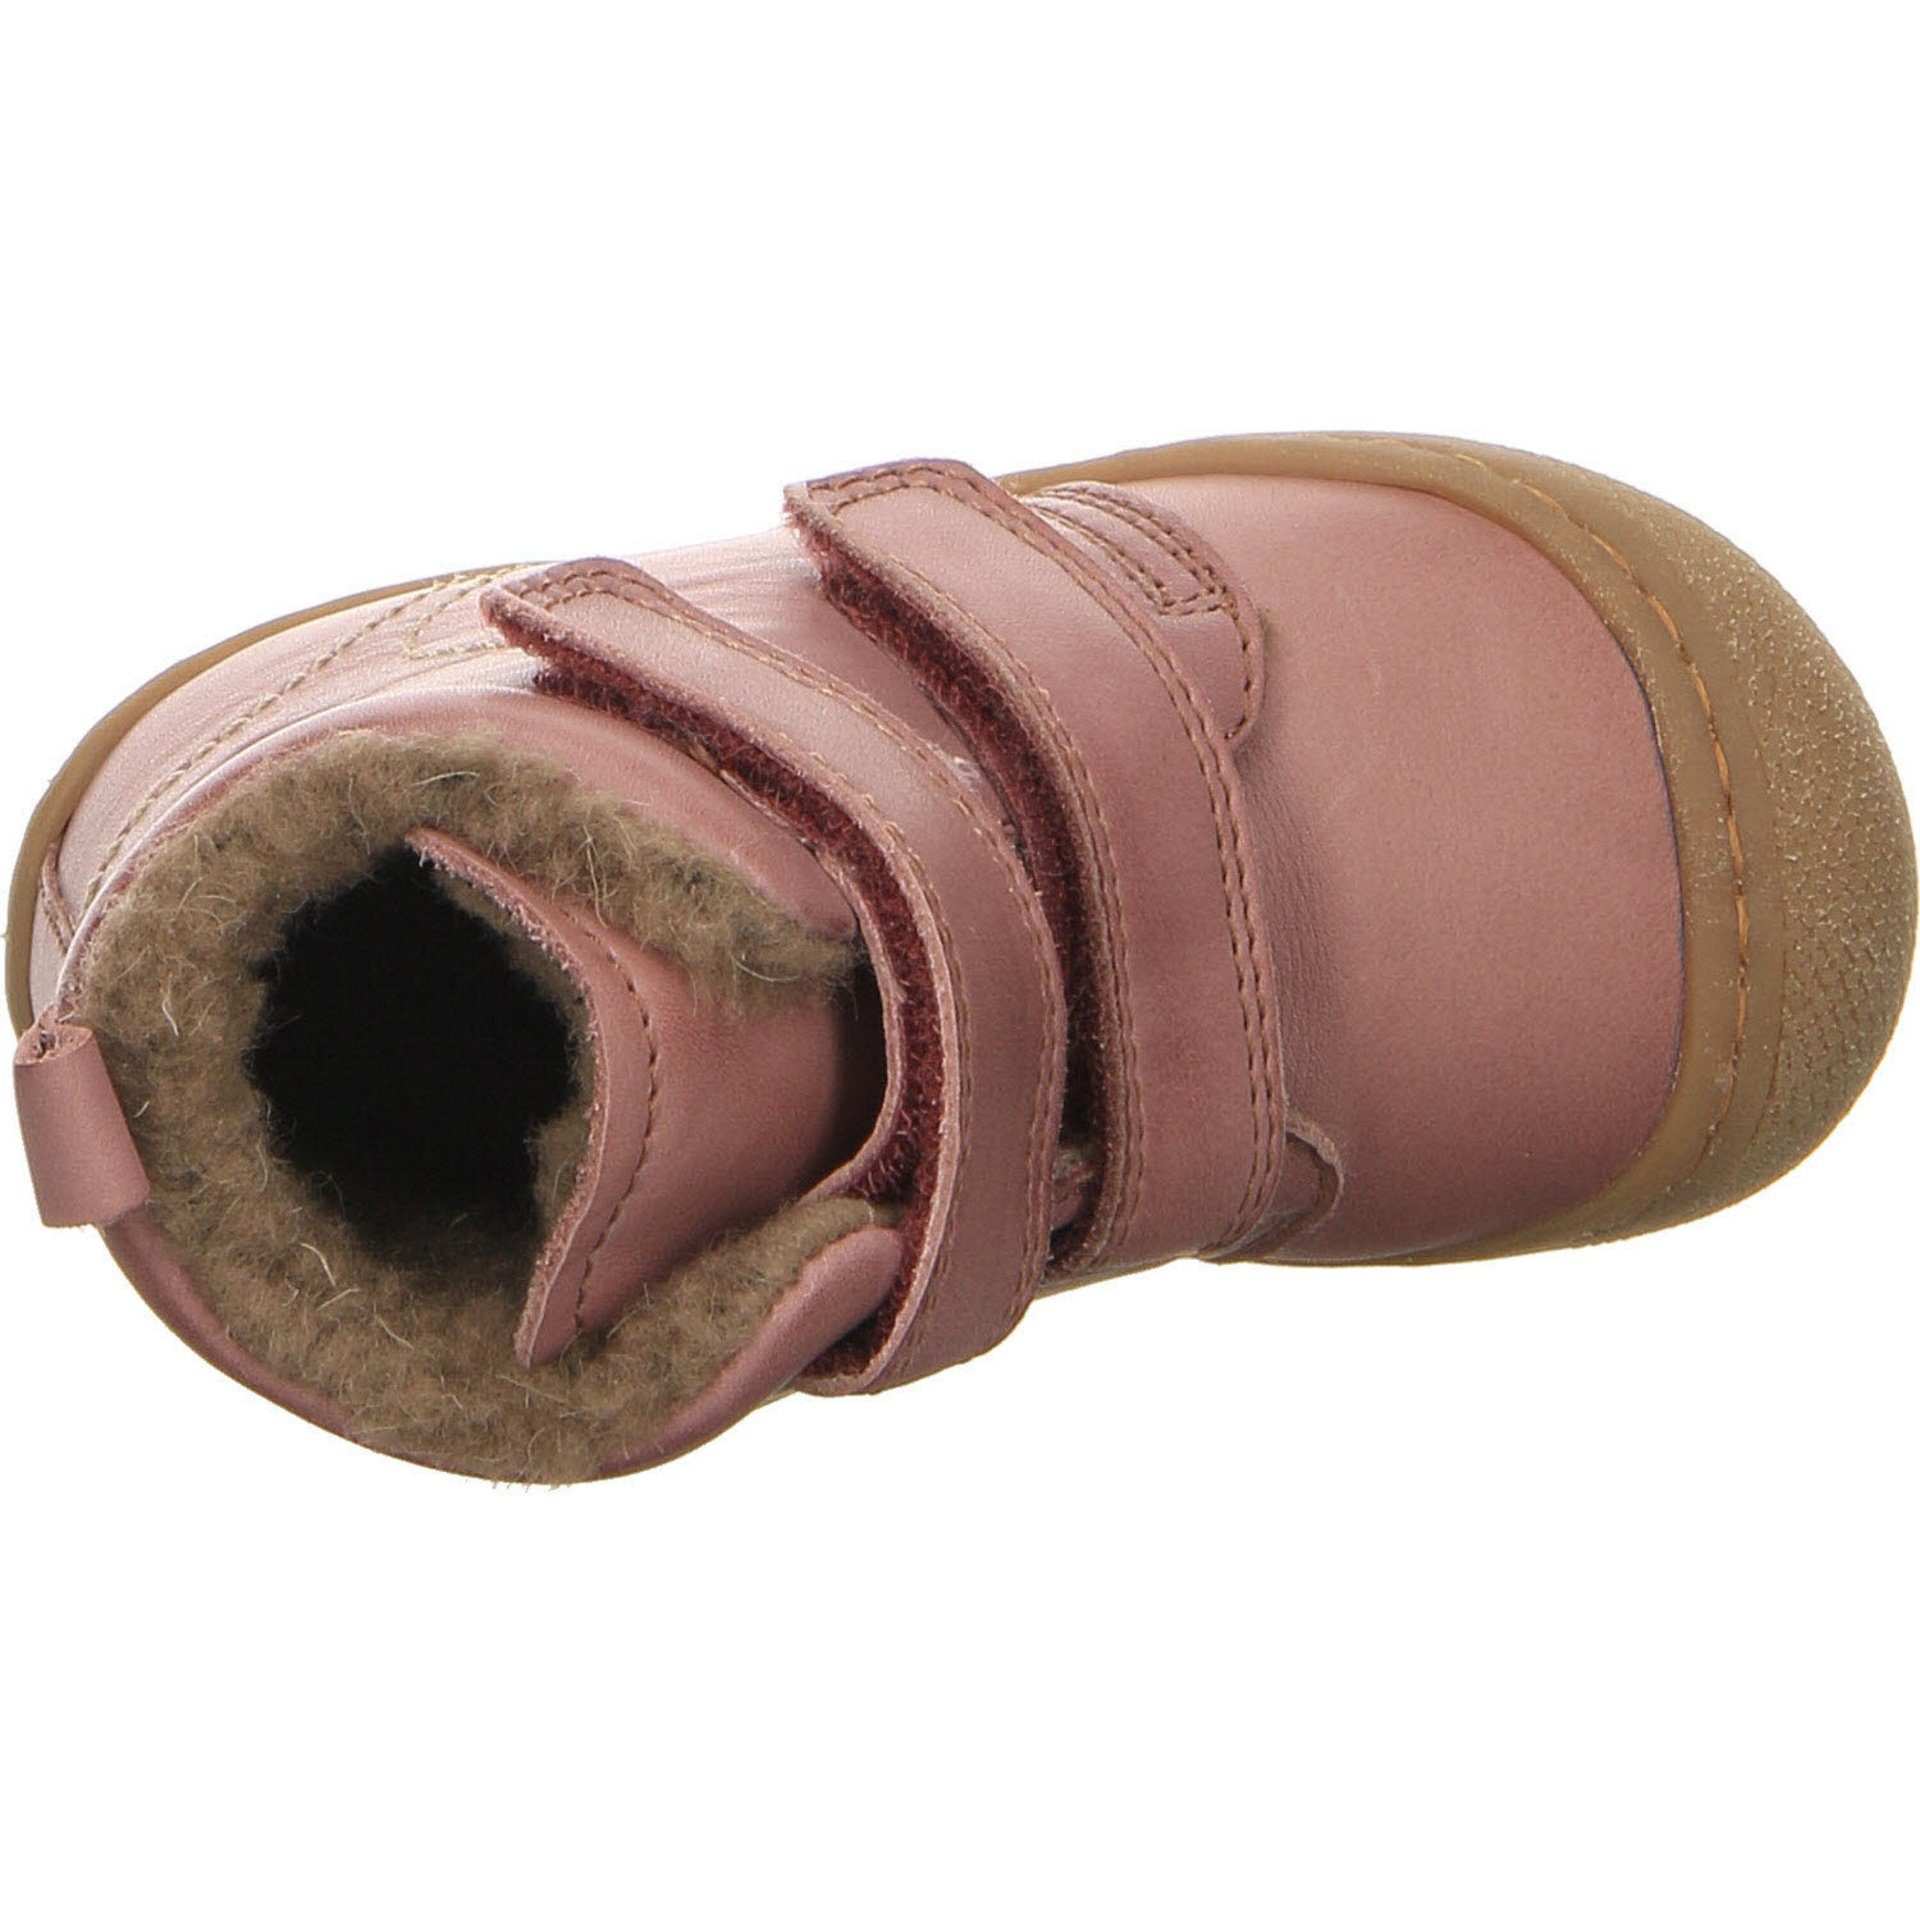 Bubble Krabbelschuhe Boots Glattleder Lauflernschuhe Baby Lauflernschuh Naturino rosa